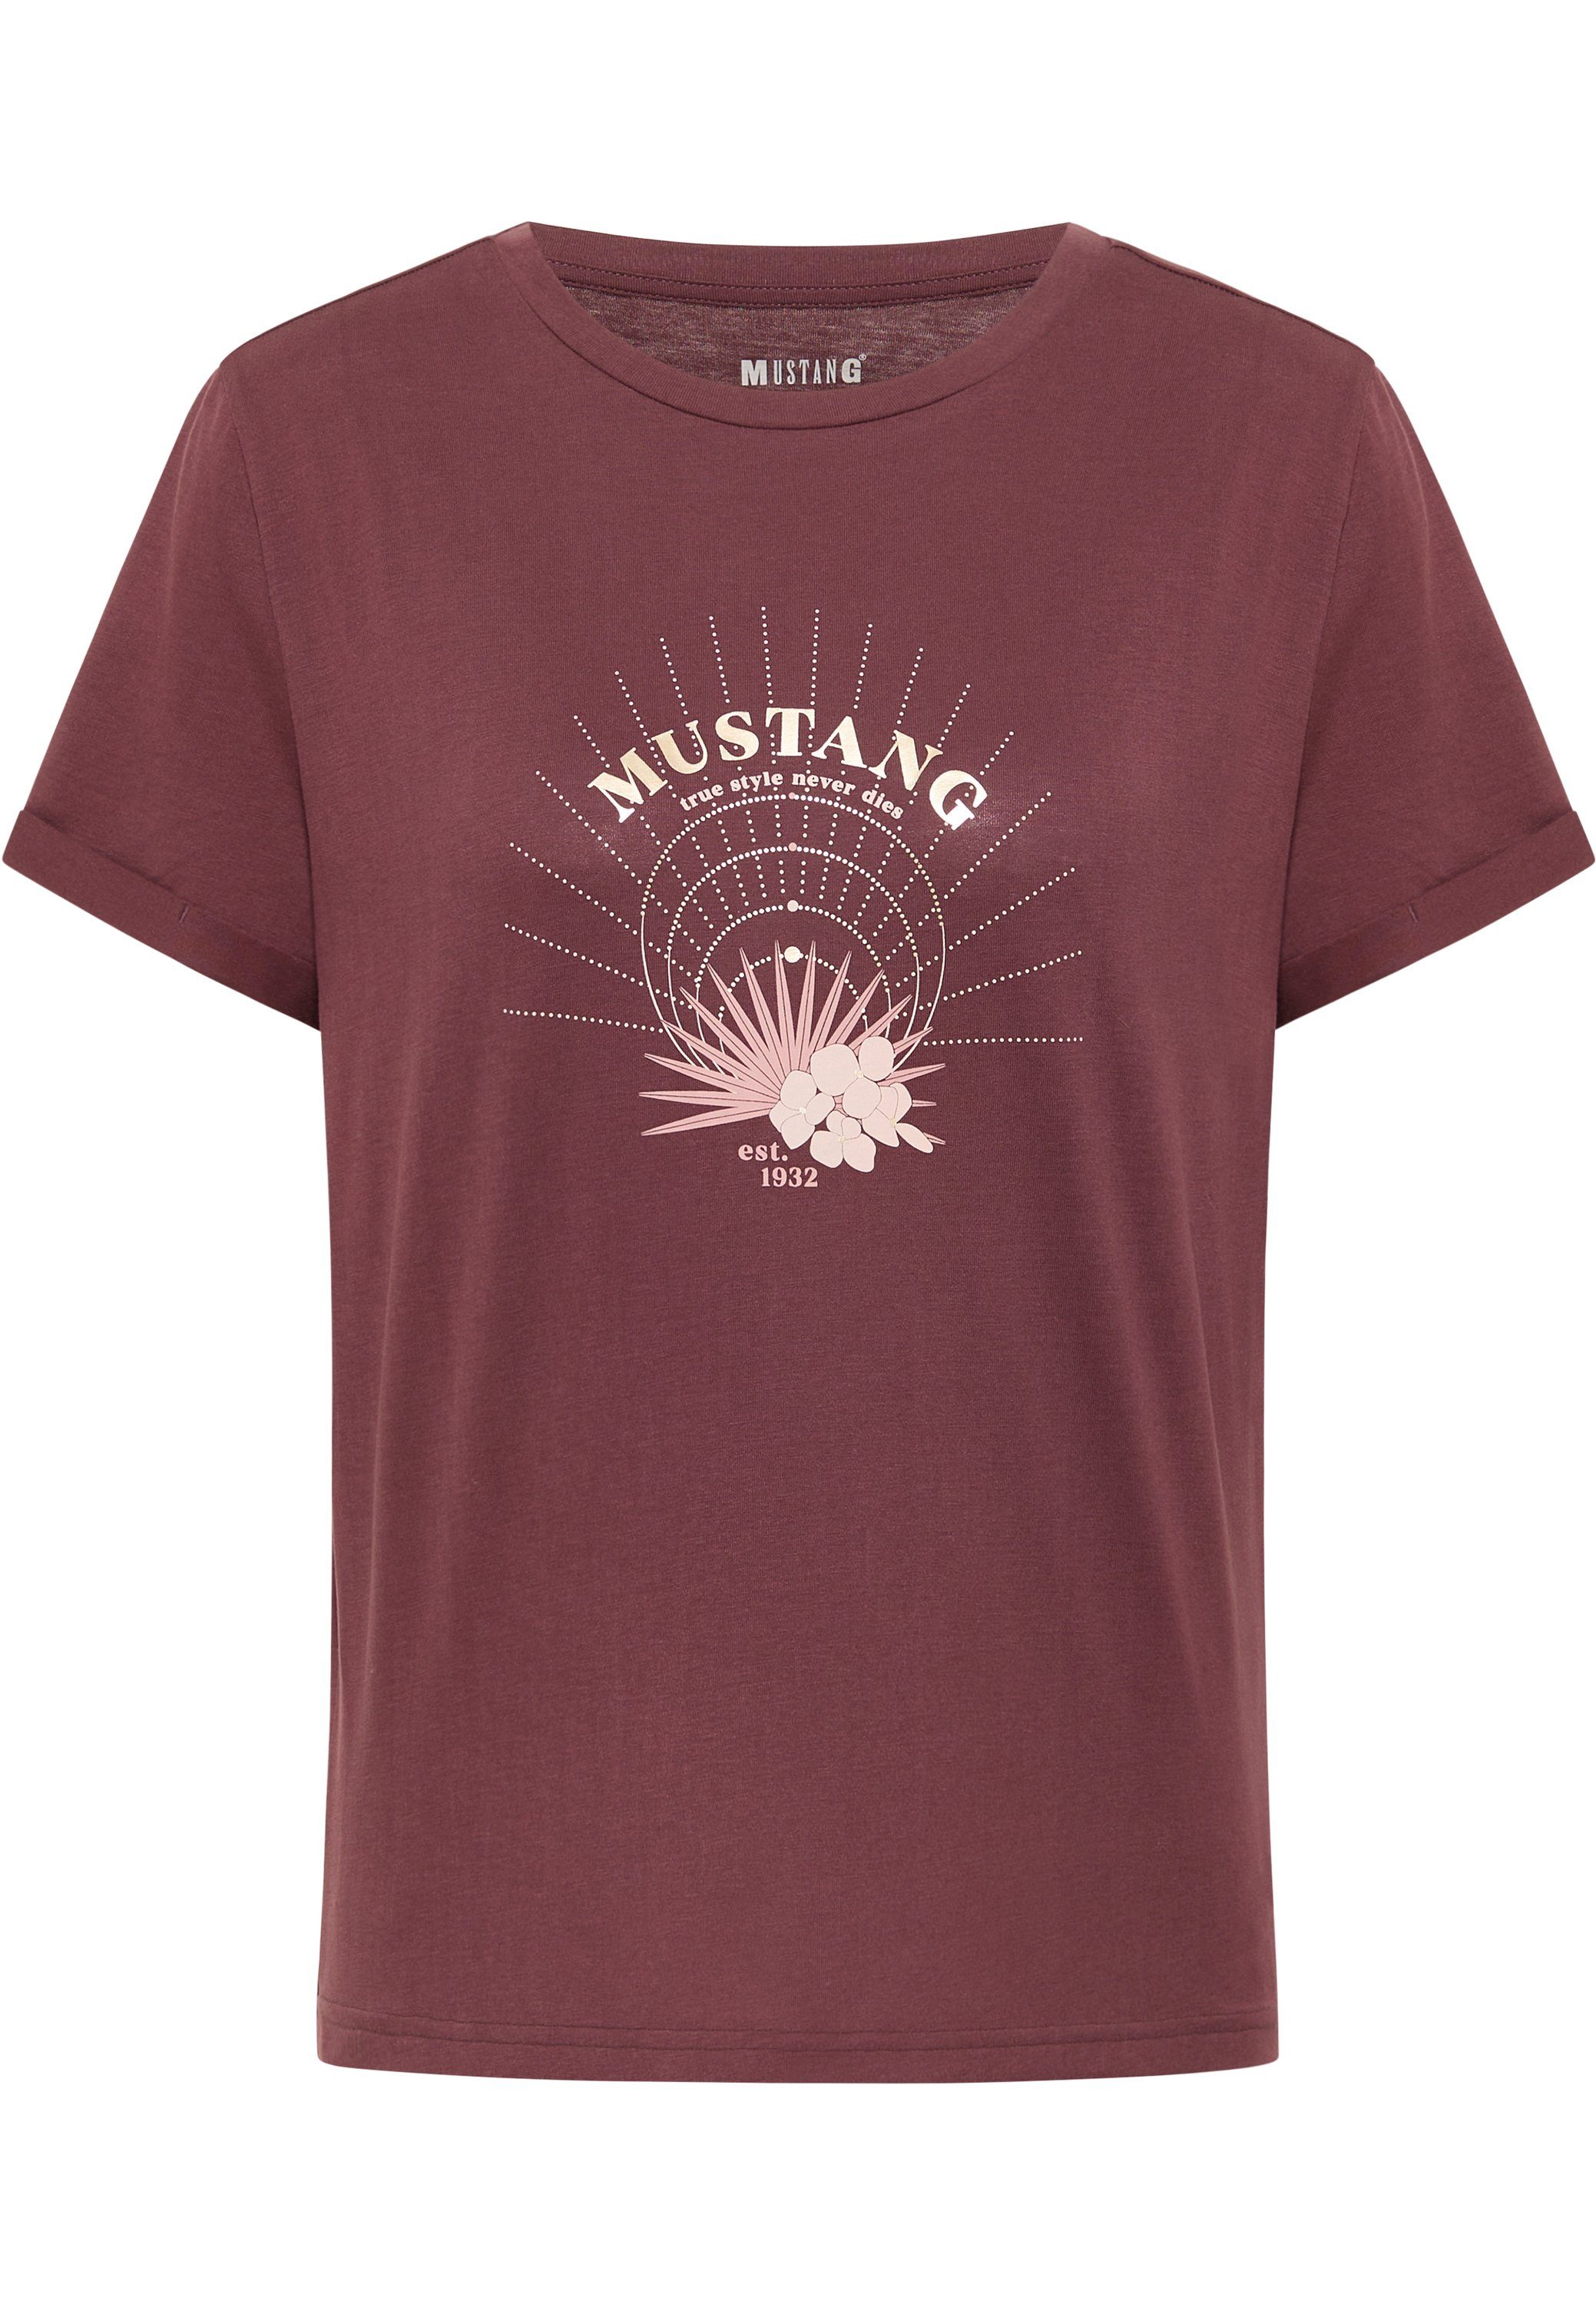 MUSTANG T-Shirt Mustang Style Alina C Foil, Folienprint auf der Vorderseite | Rollkragenshirts